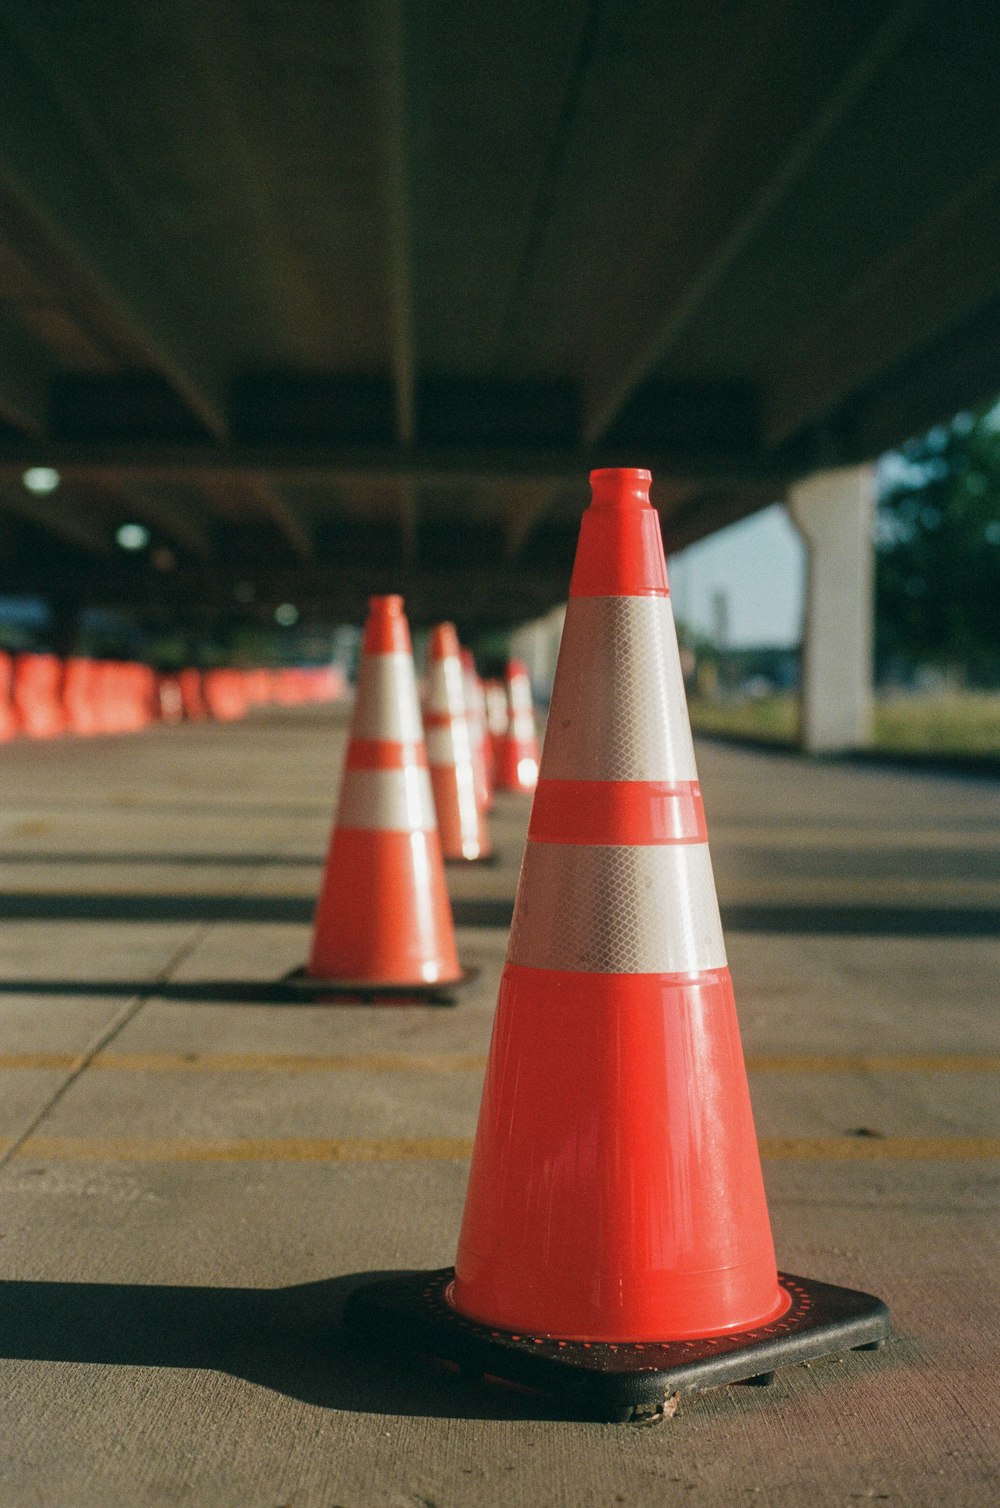 orange and white traffic cone on gray concrete floor